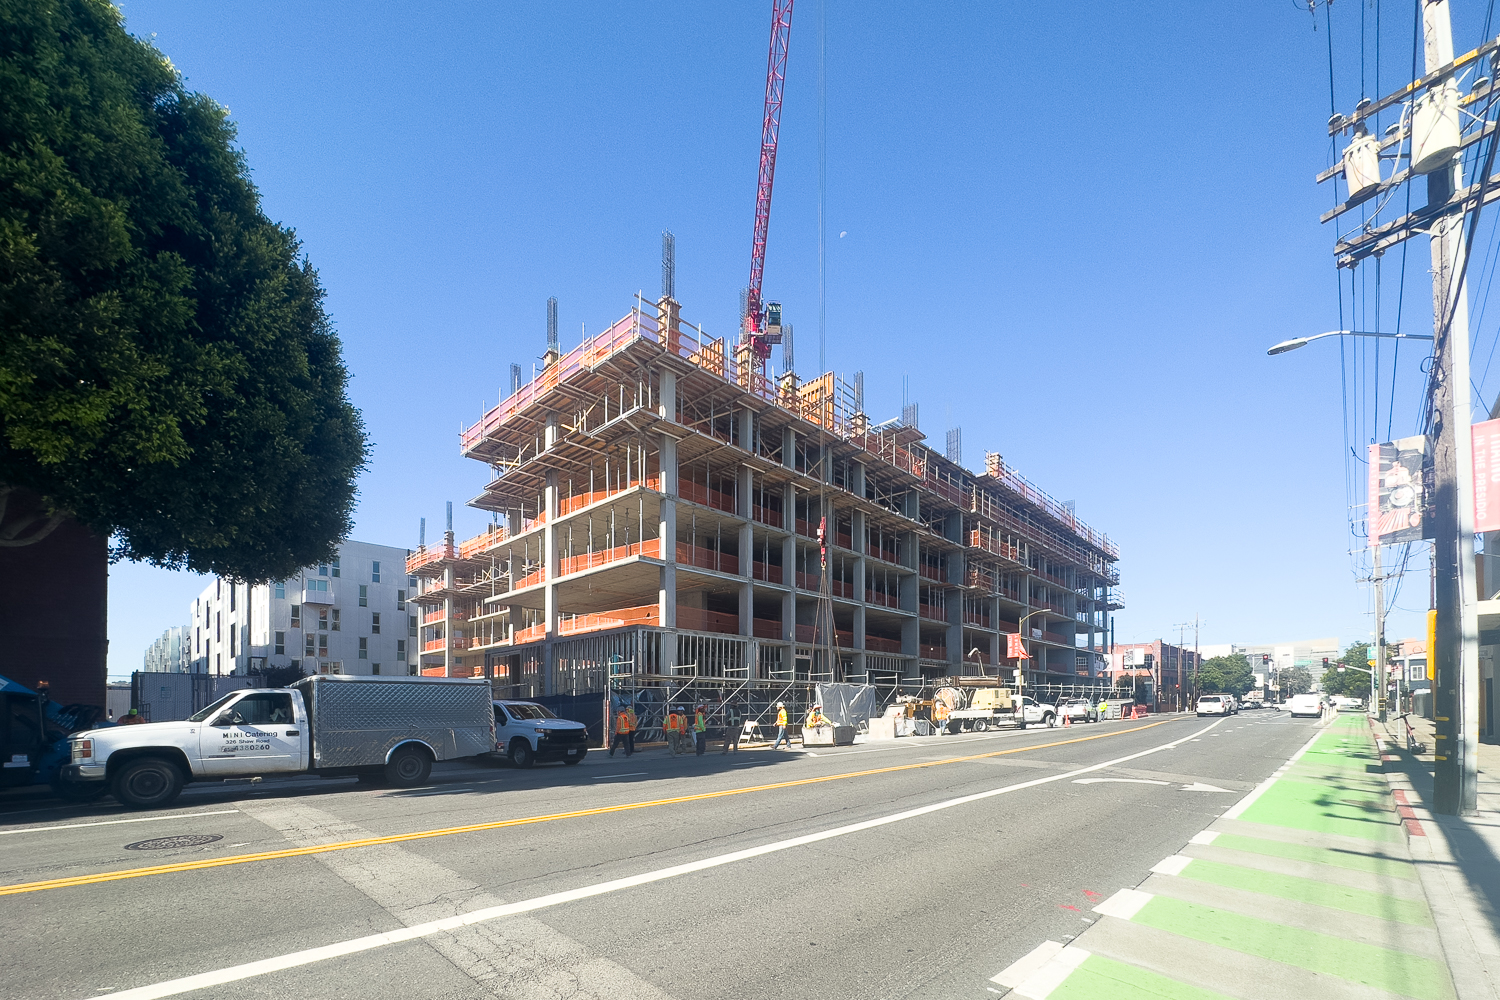 Suffolk Construction Company Archives - San Francisco YIMBY